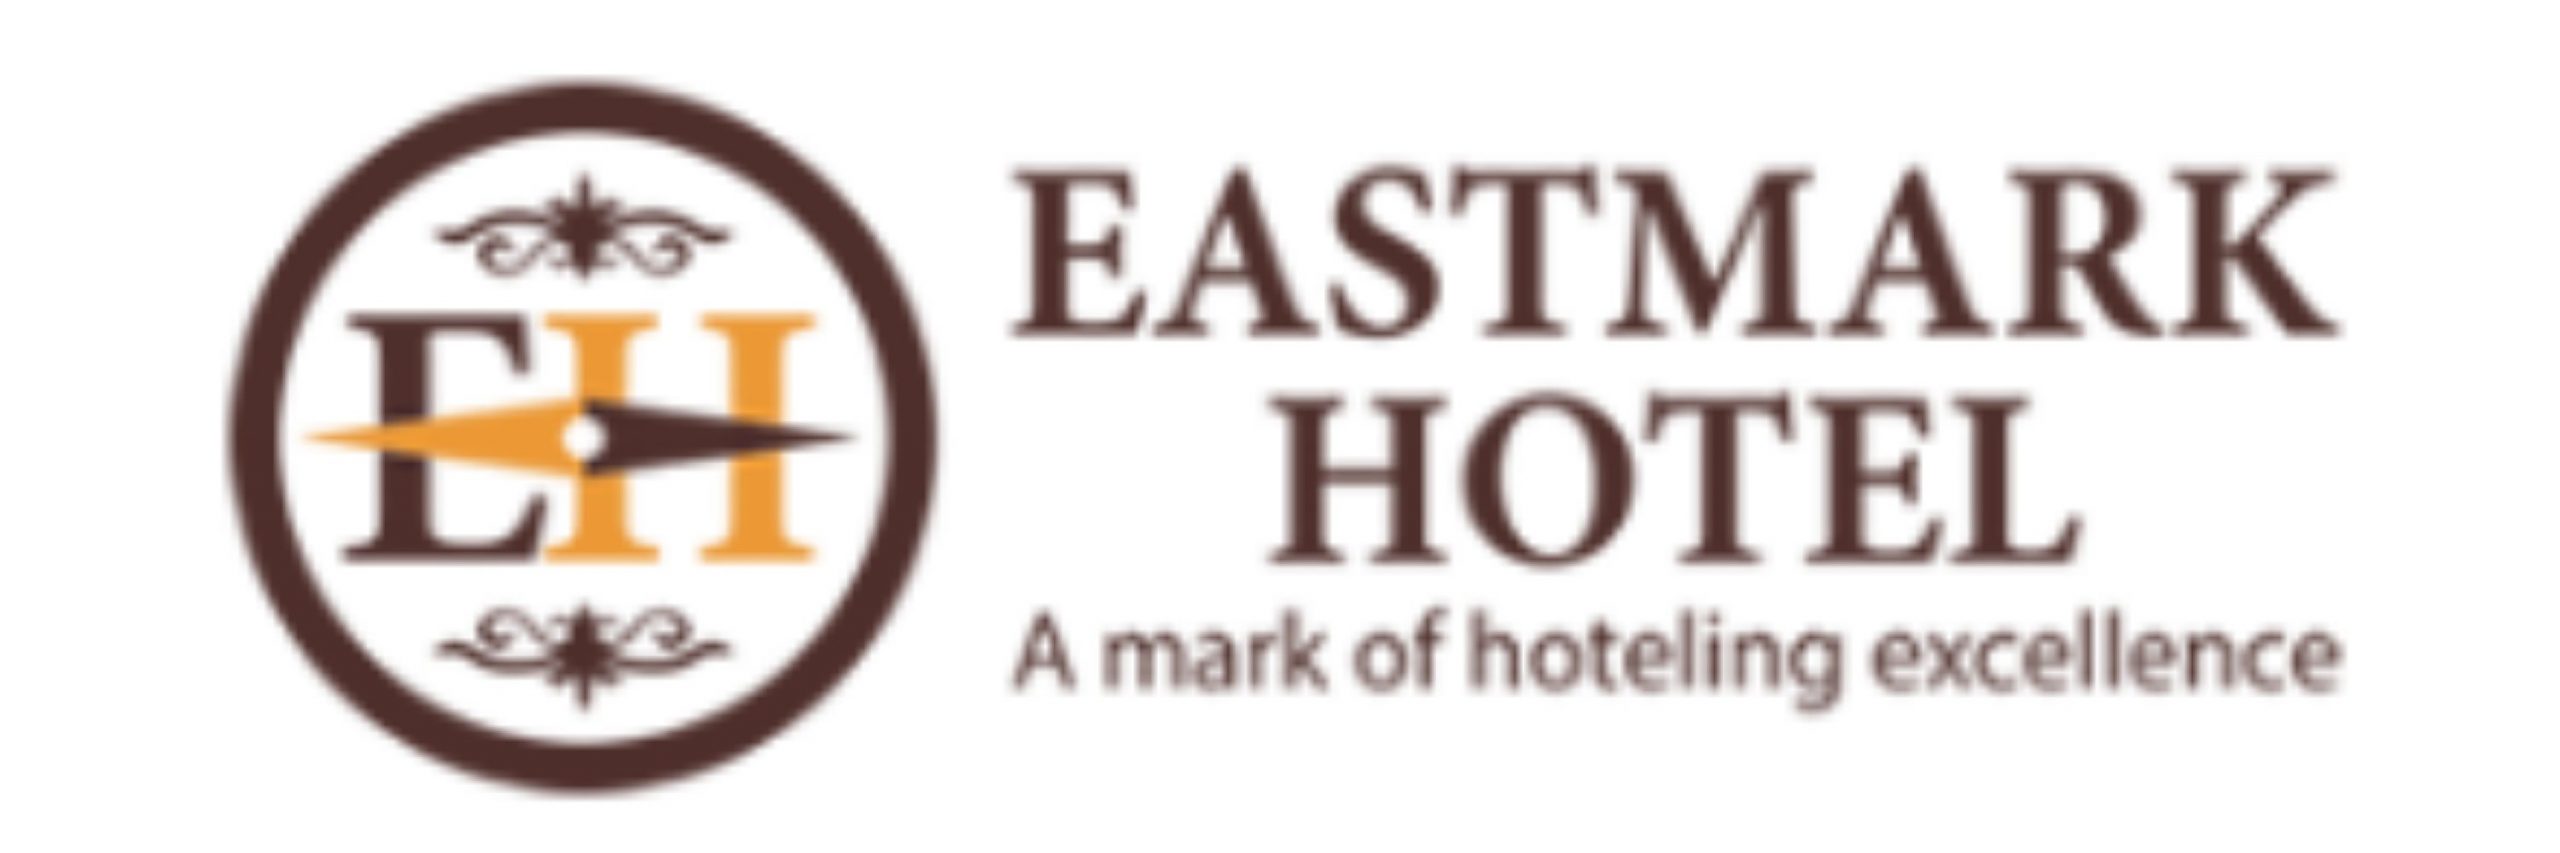 Eastmark Hotel |   Hello world!